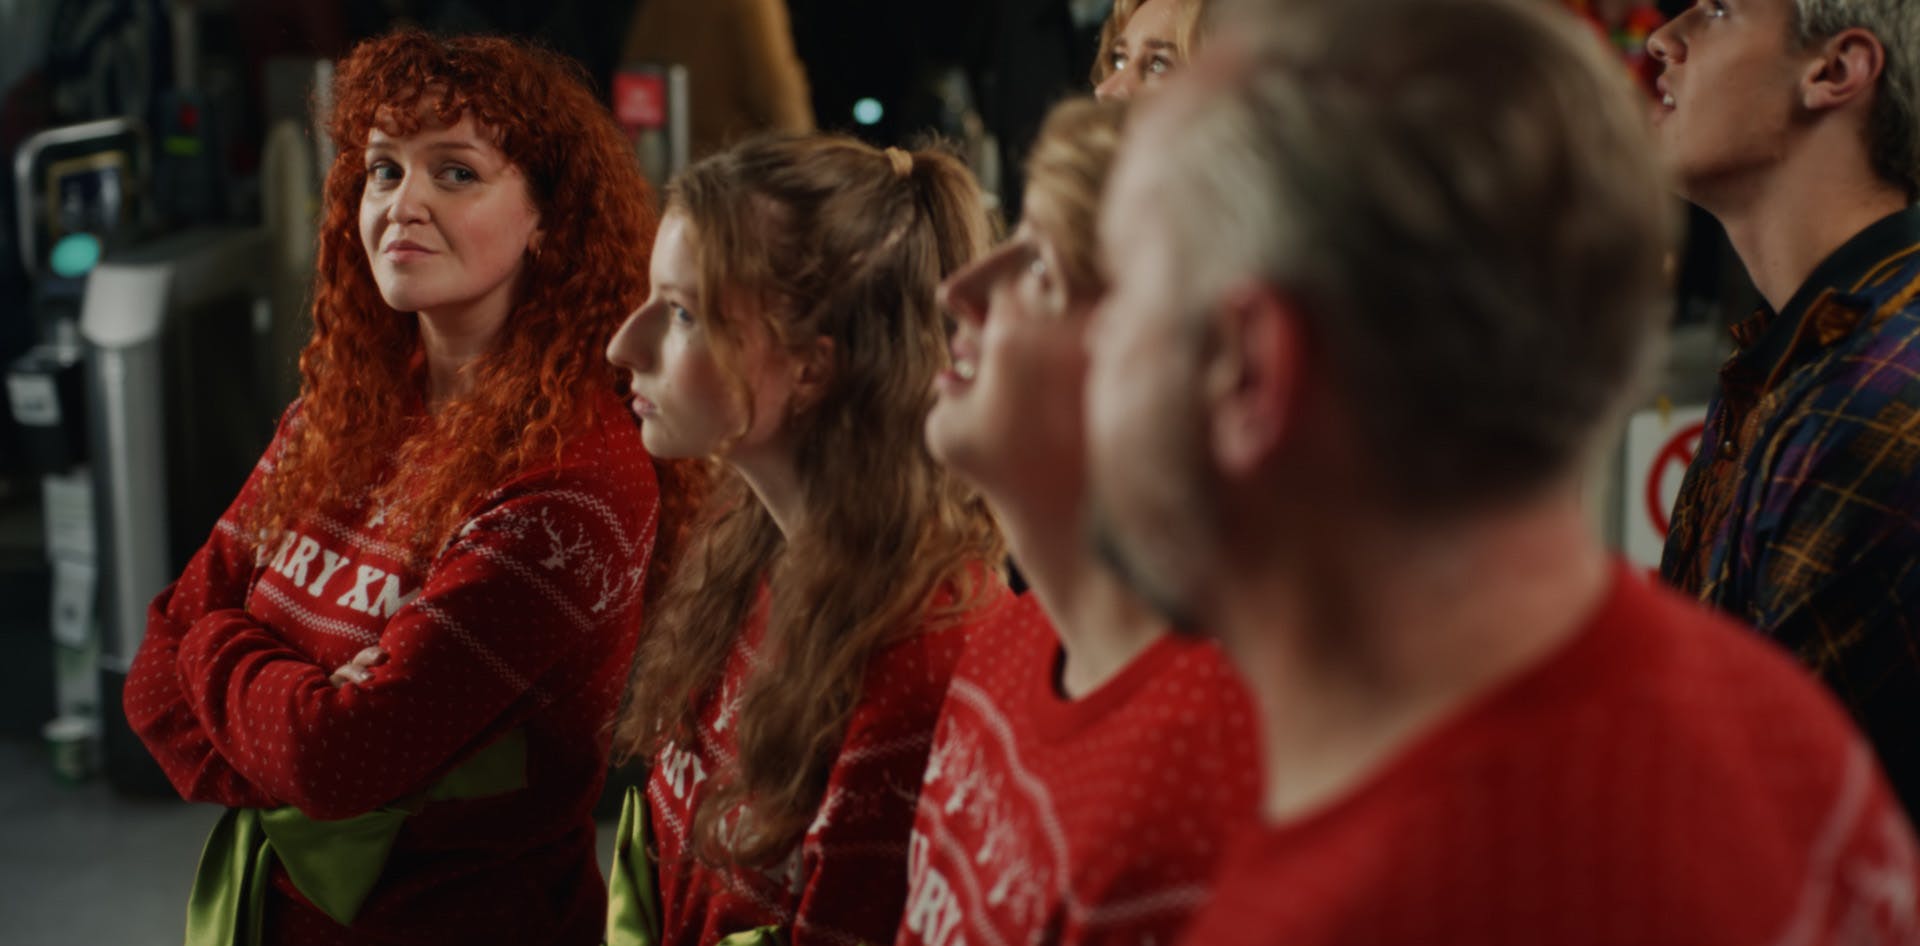 McDonald’s presents festive moments of joy in Christmas advertisement